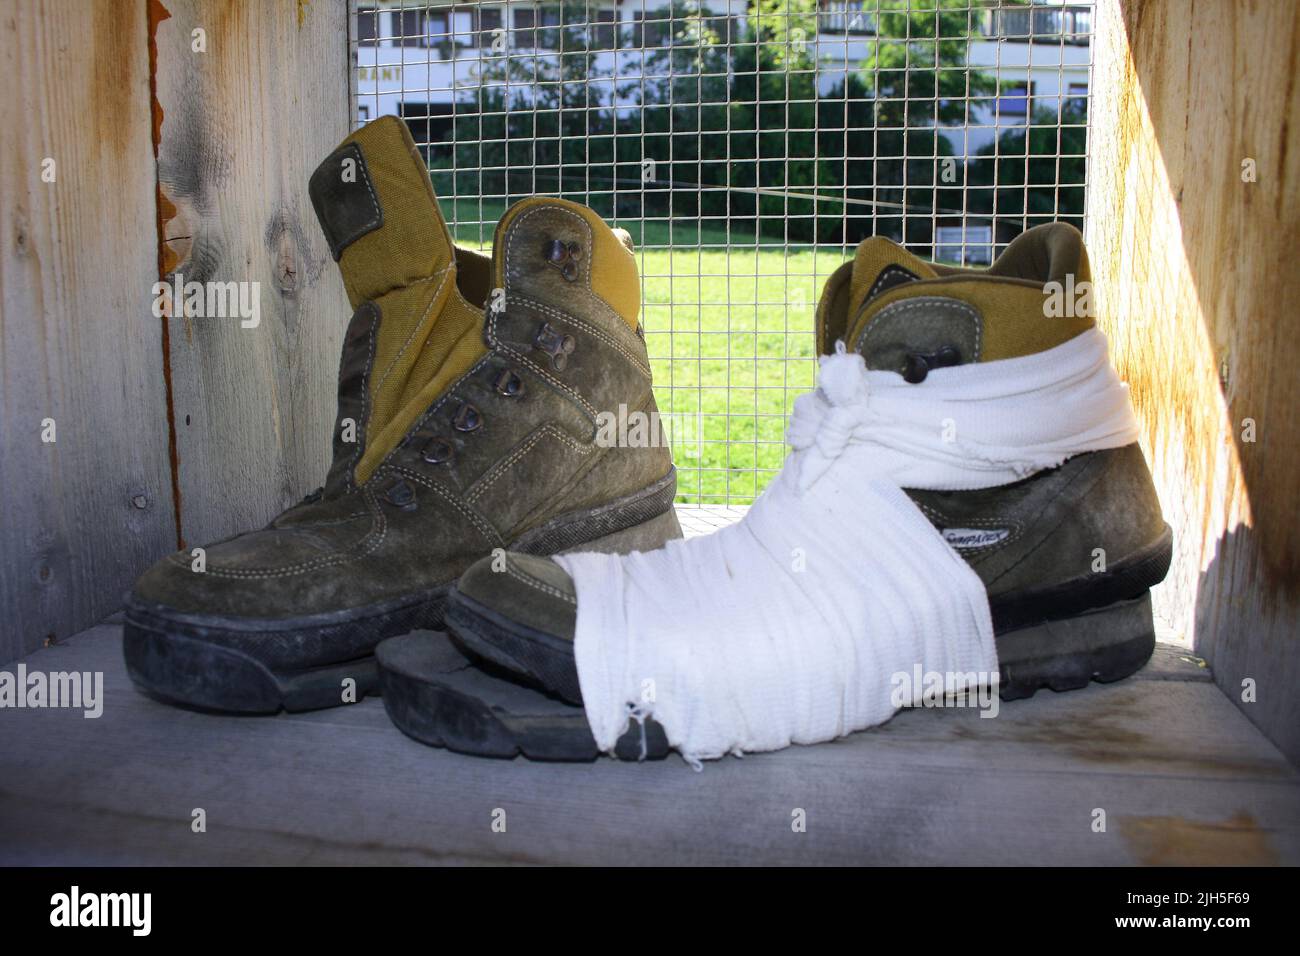 Schuh - Shoe Stock Photo - Alamy